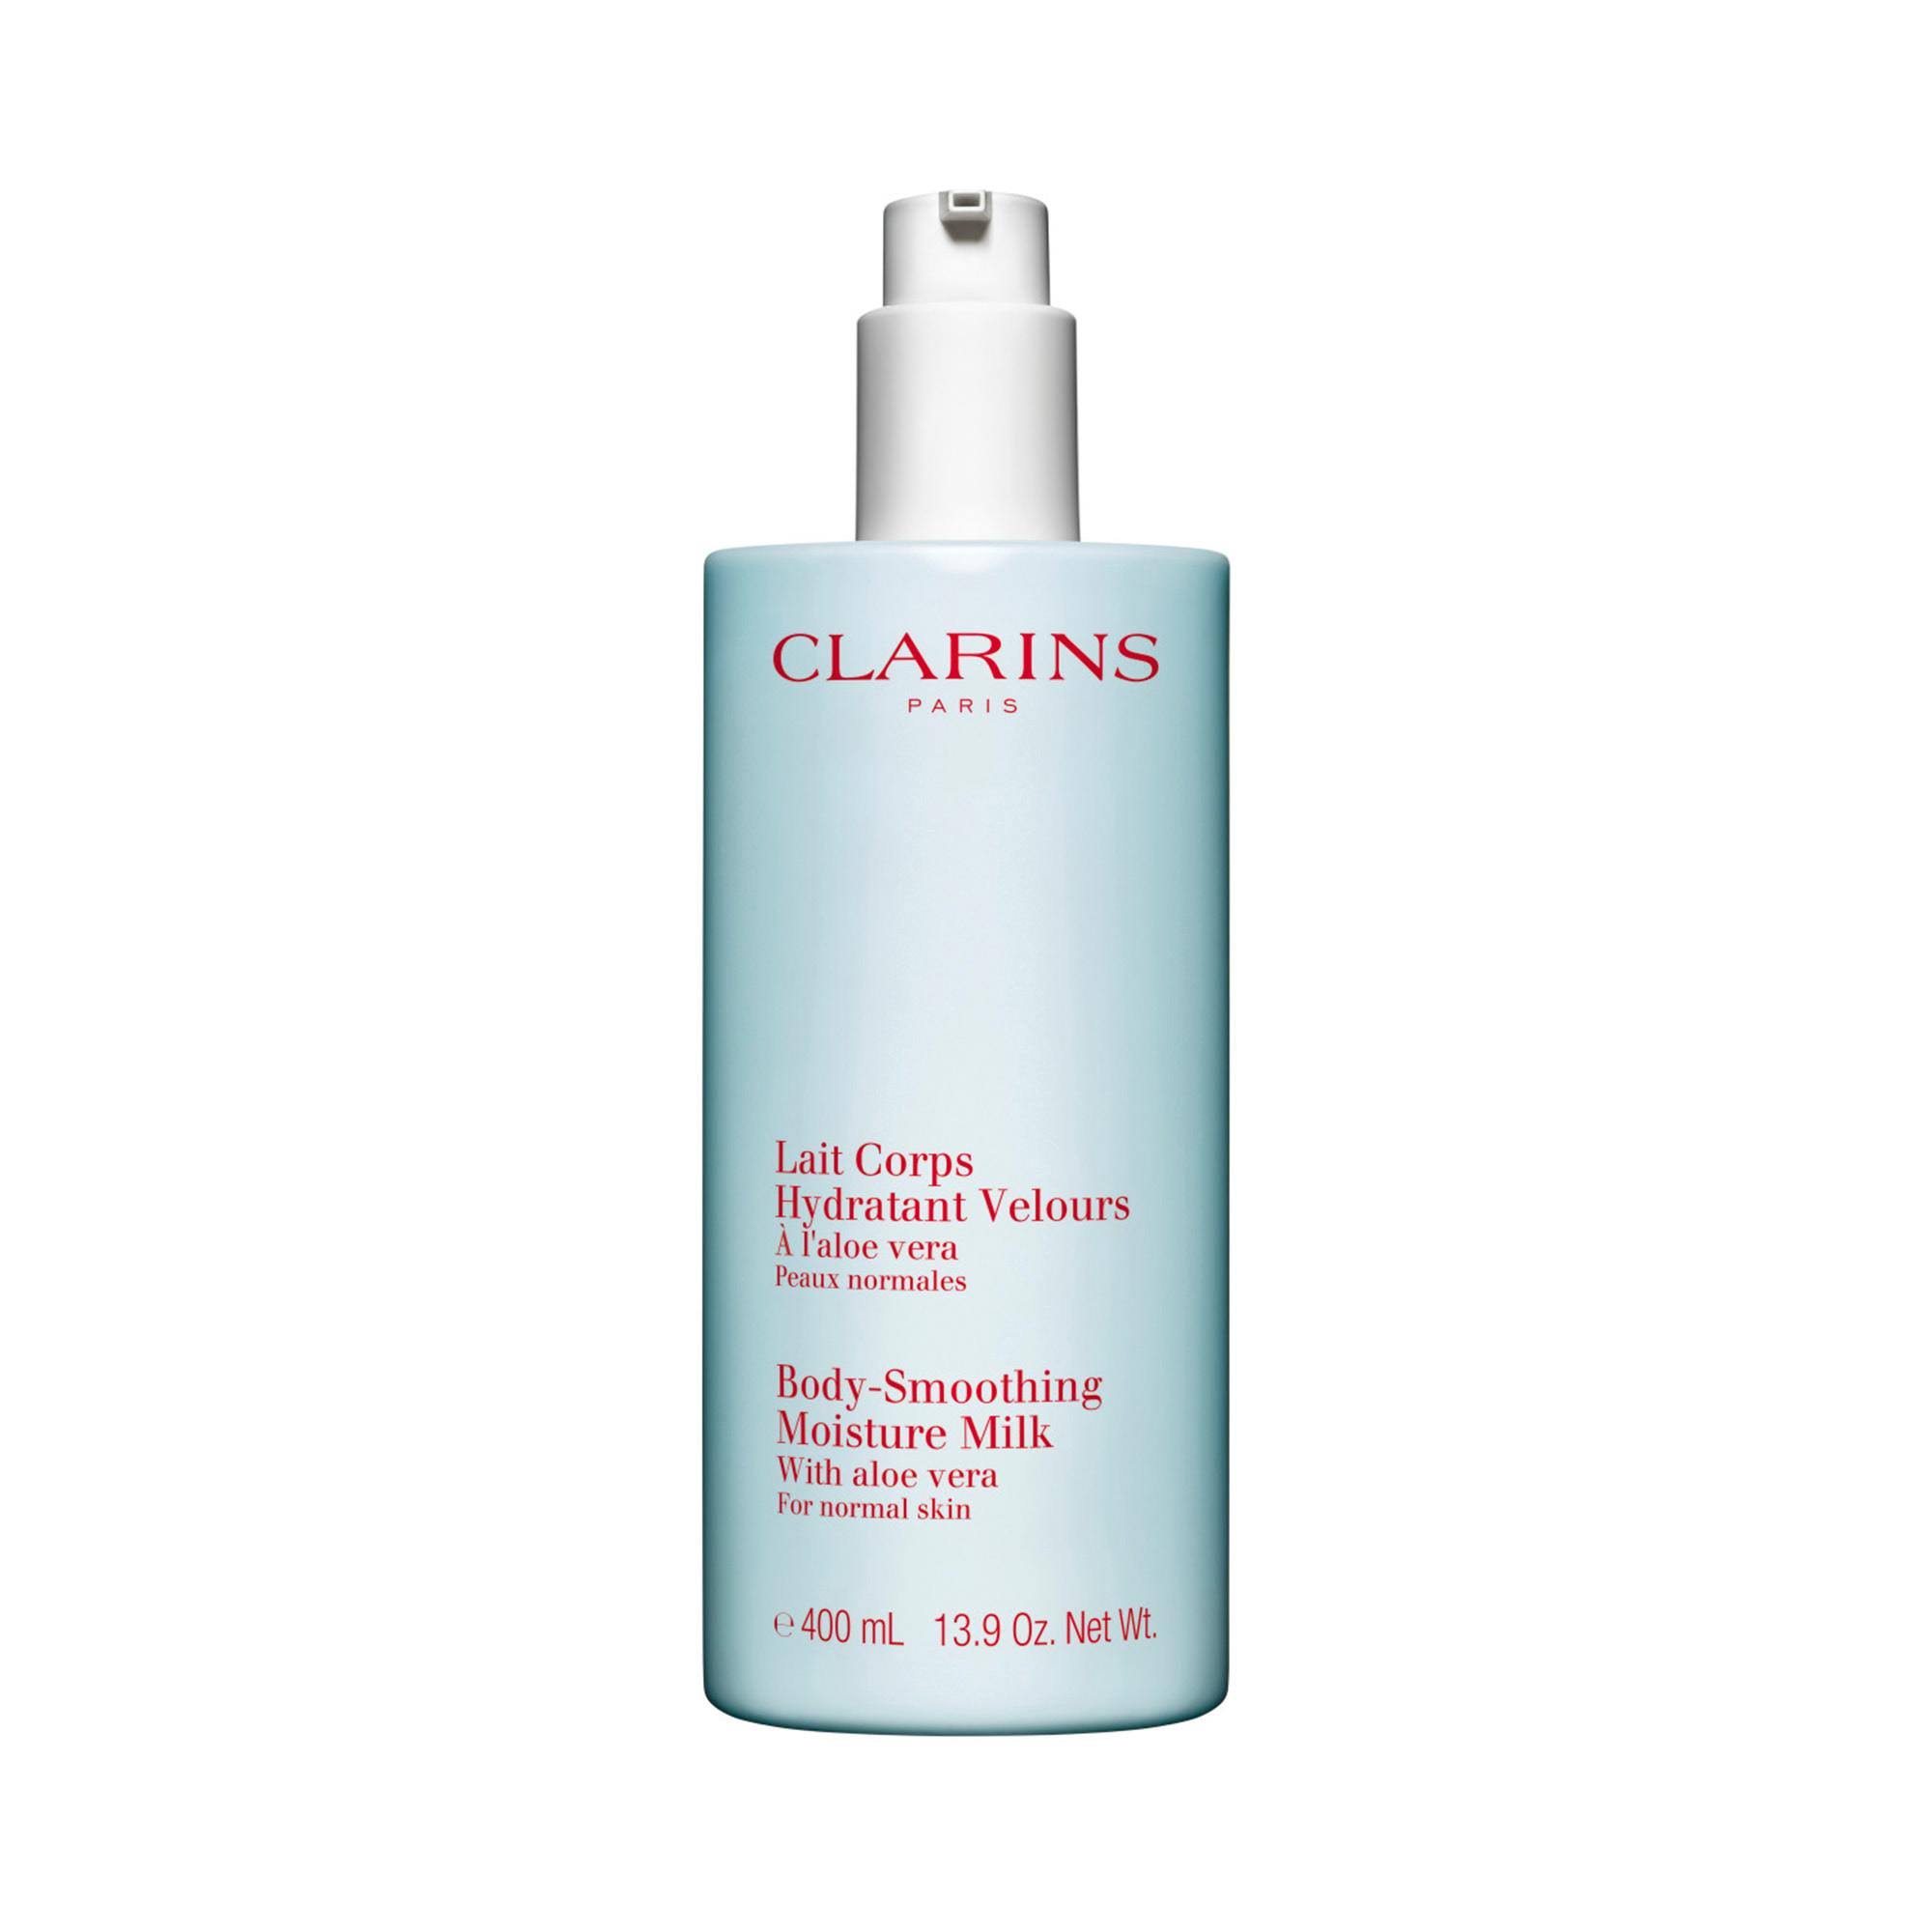 CLARINS - Body-smoothing Moisture Milk 400 ml